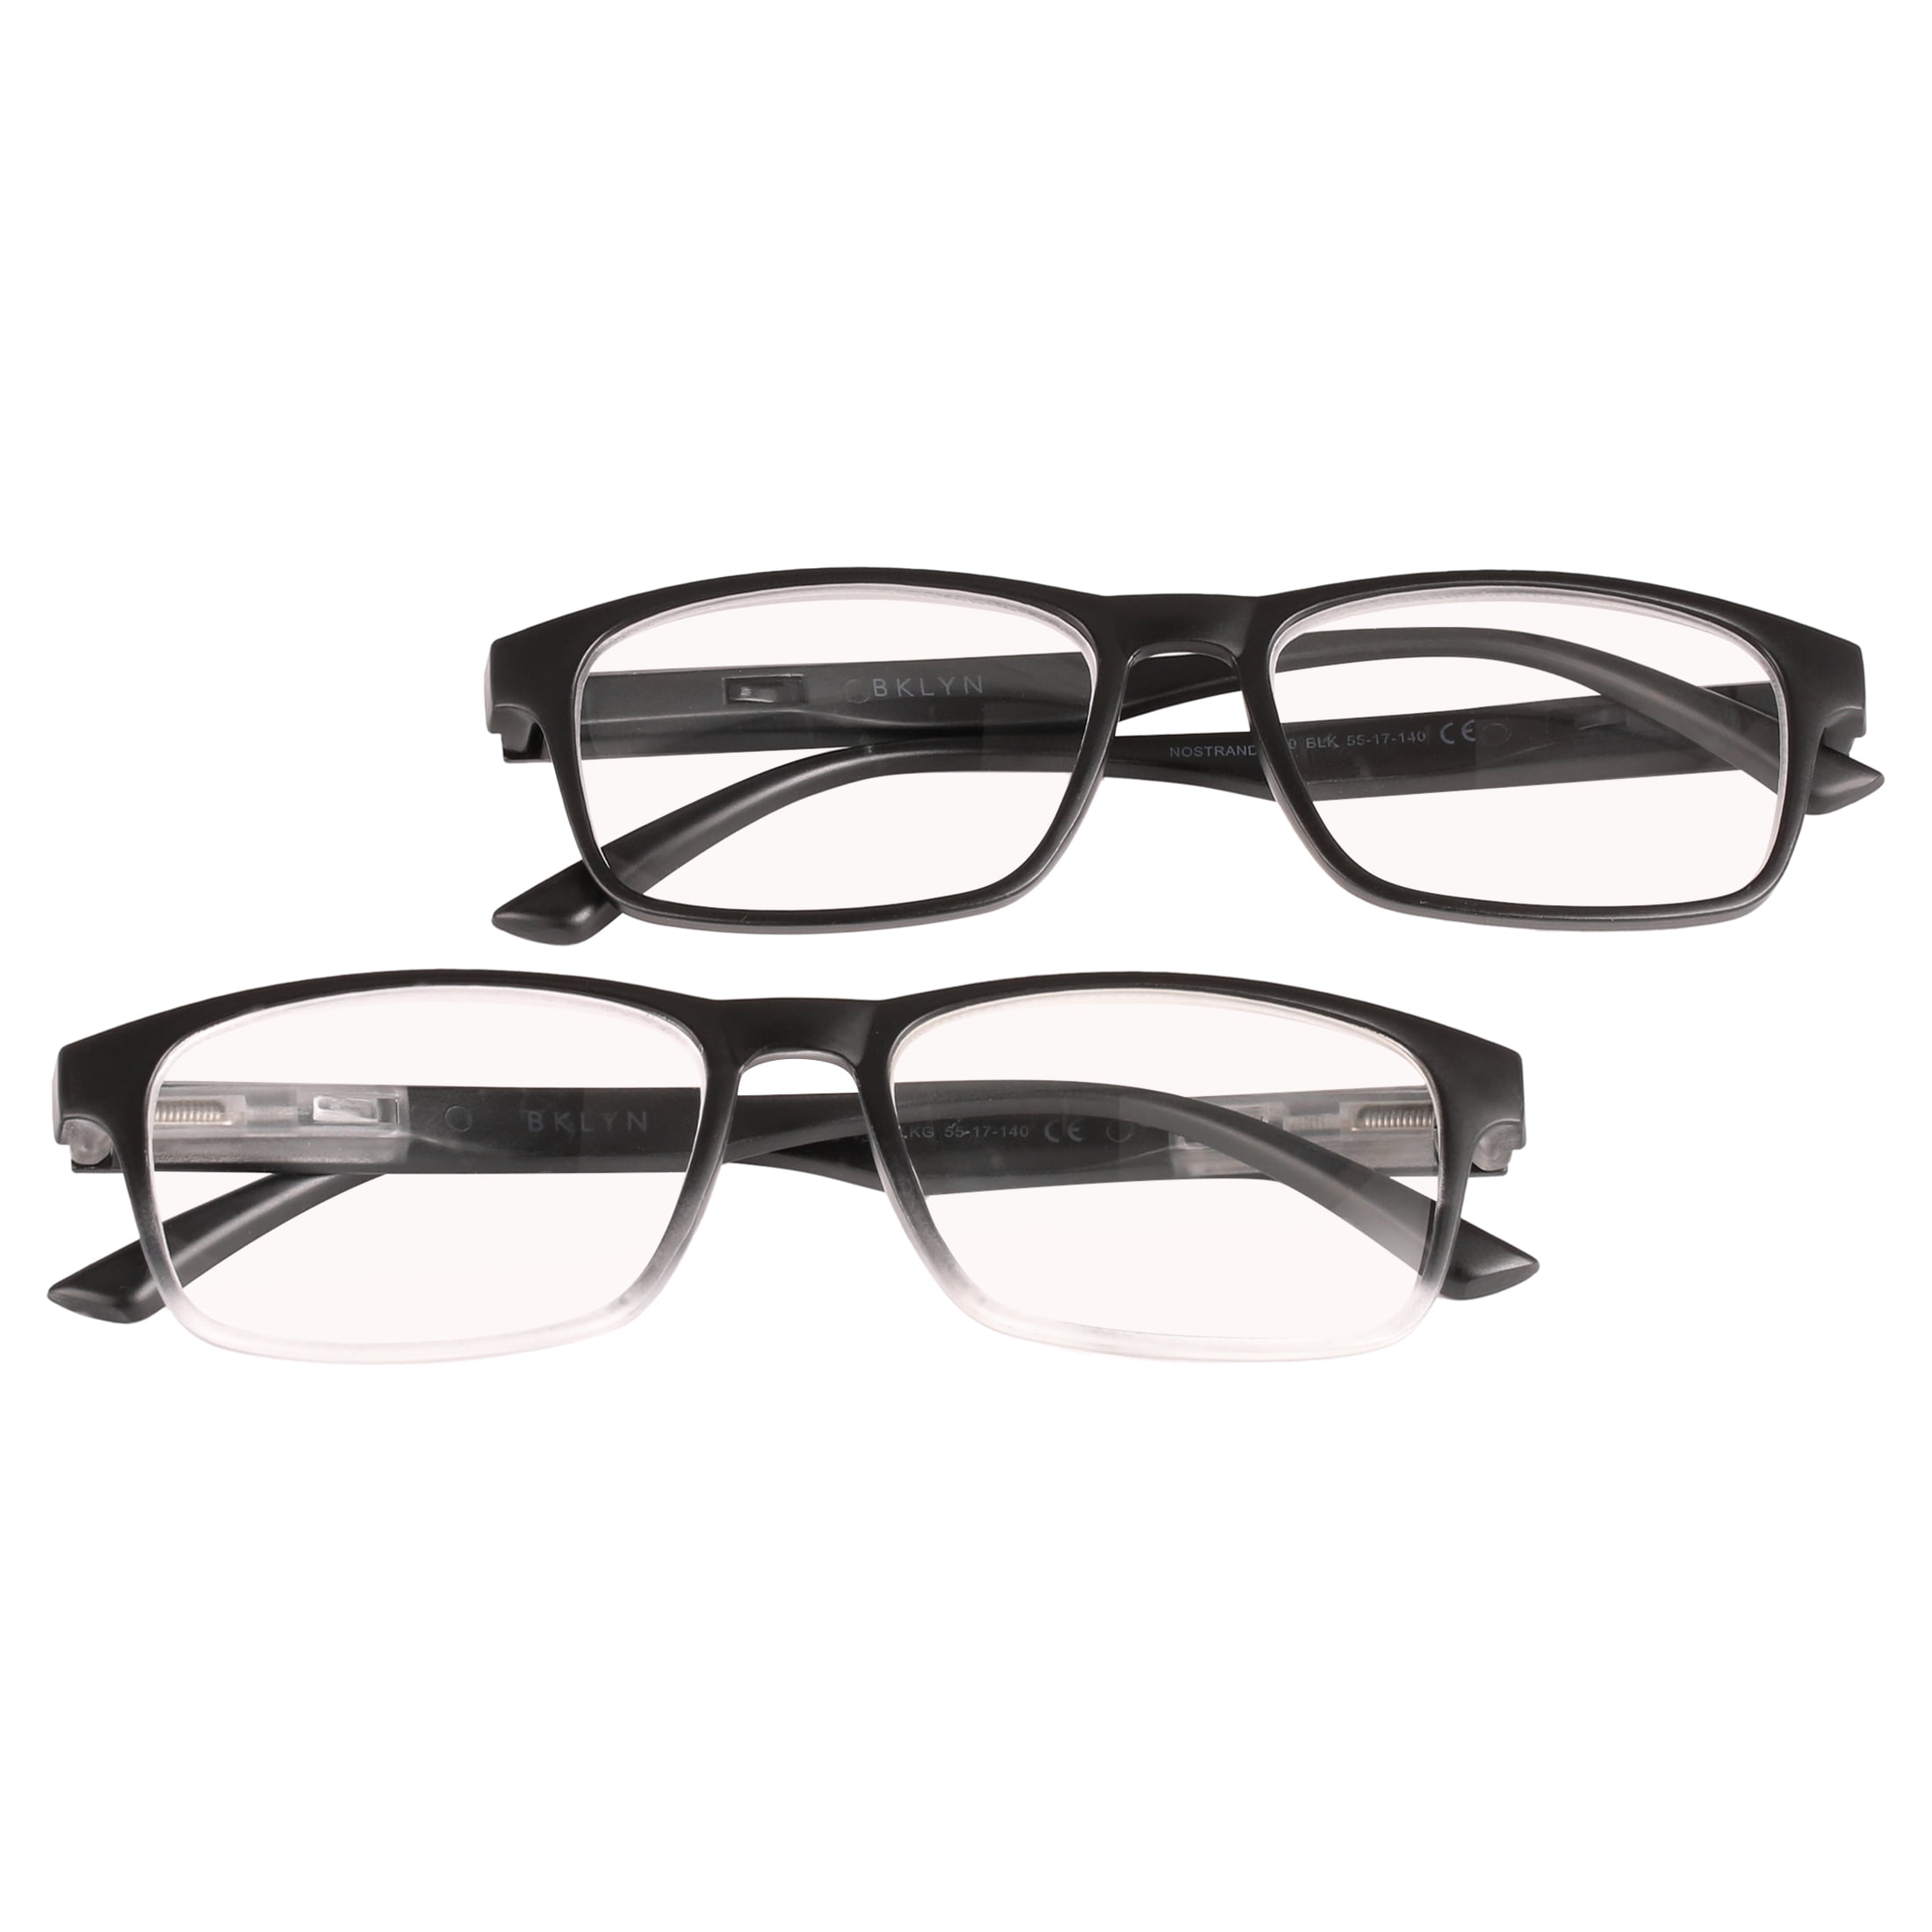 Bklyn Nostrand +3.00 Mens Plastic Reading Glasses & Pouches Value Pack ...